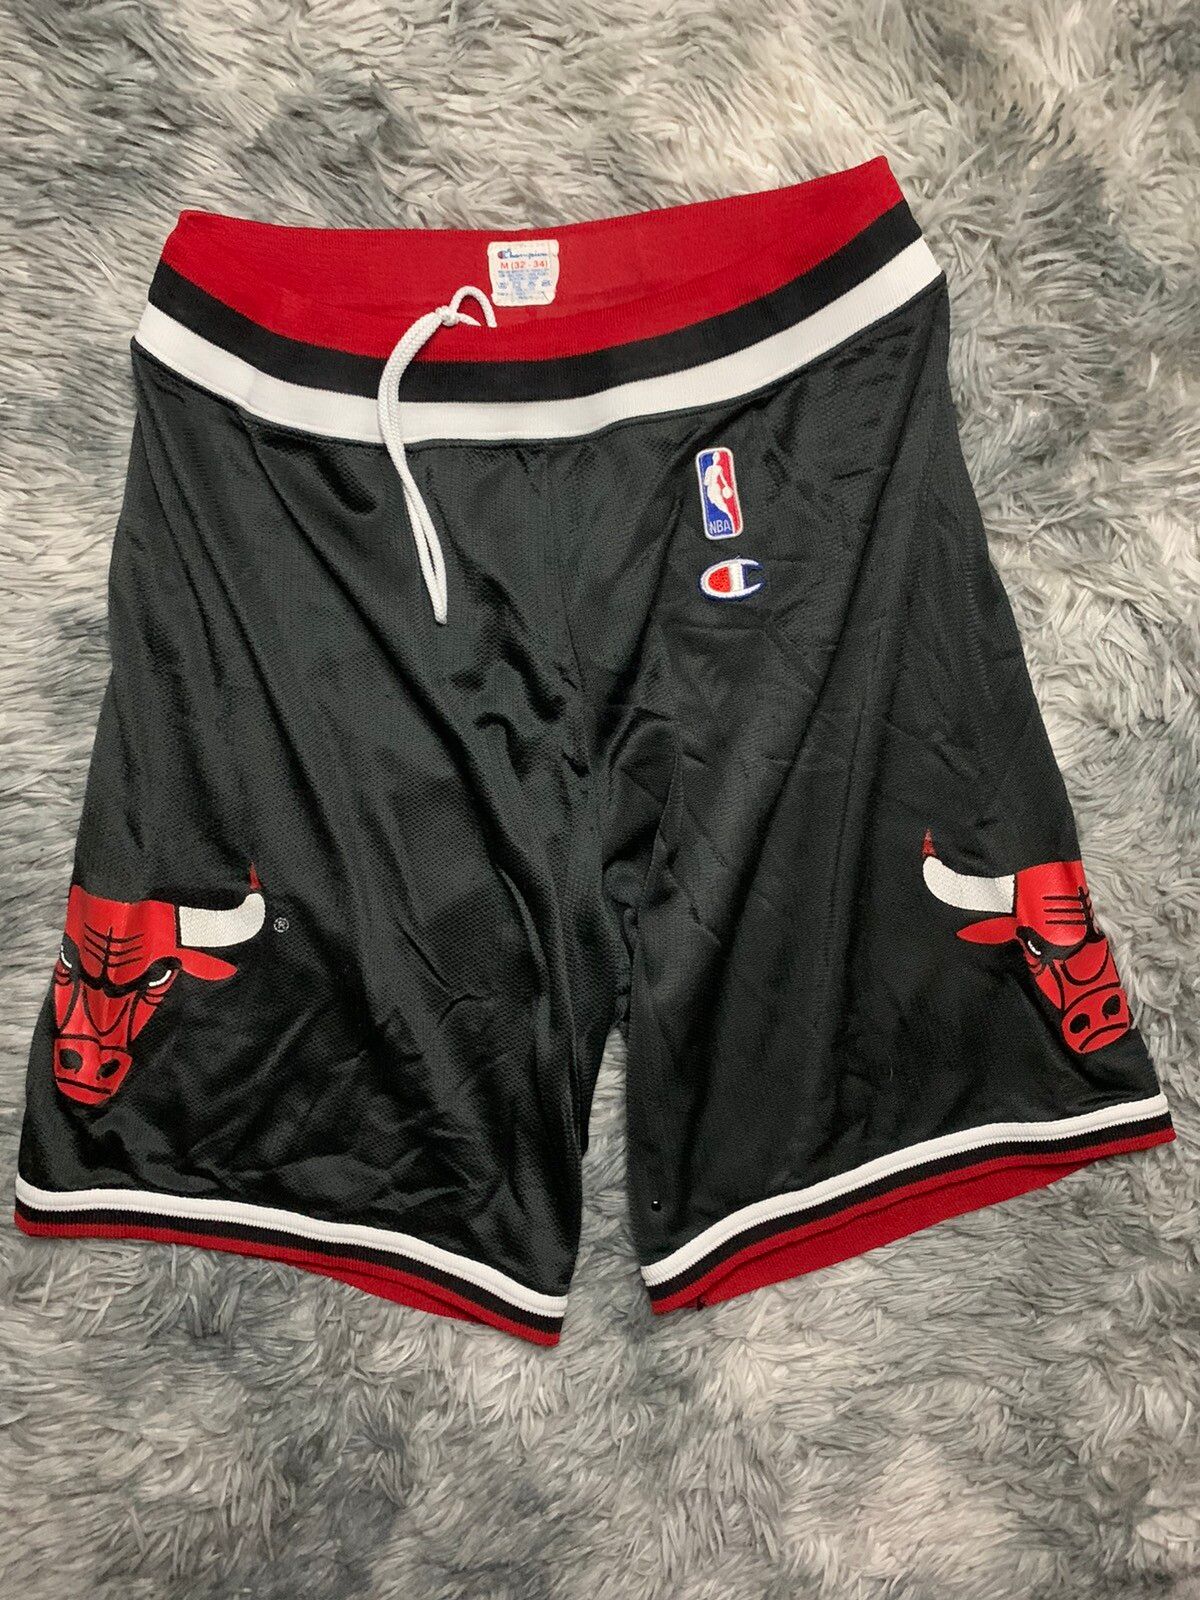 Vintage VTG 80-90’s Chicago Bulls NBA Michael Jordan champion shorts Size US 32 / EU 48 - 1 Preview